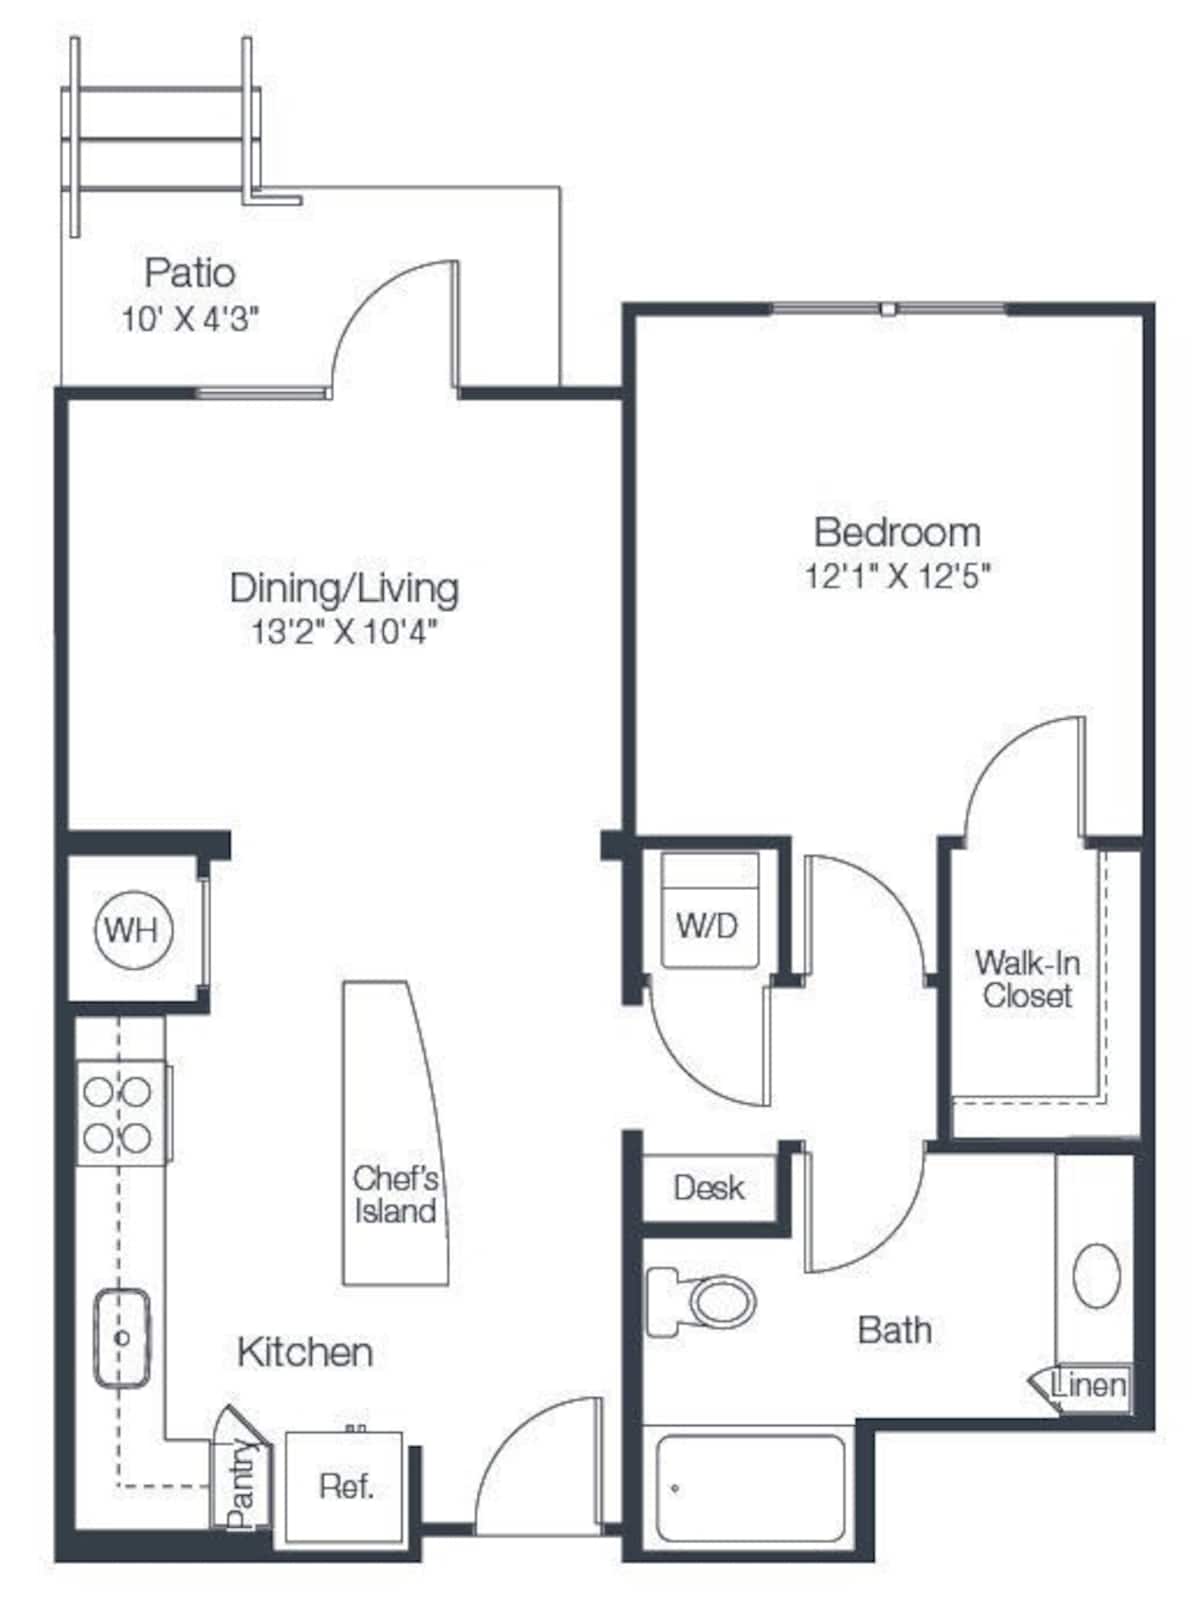 Floorplan diagram for A2d, showing 1 bedroom